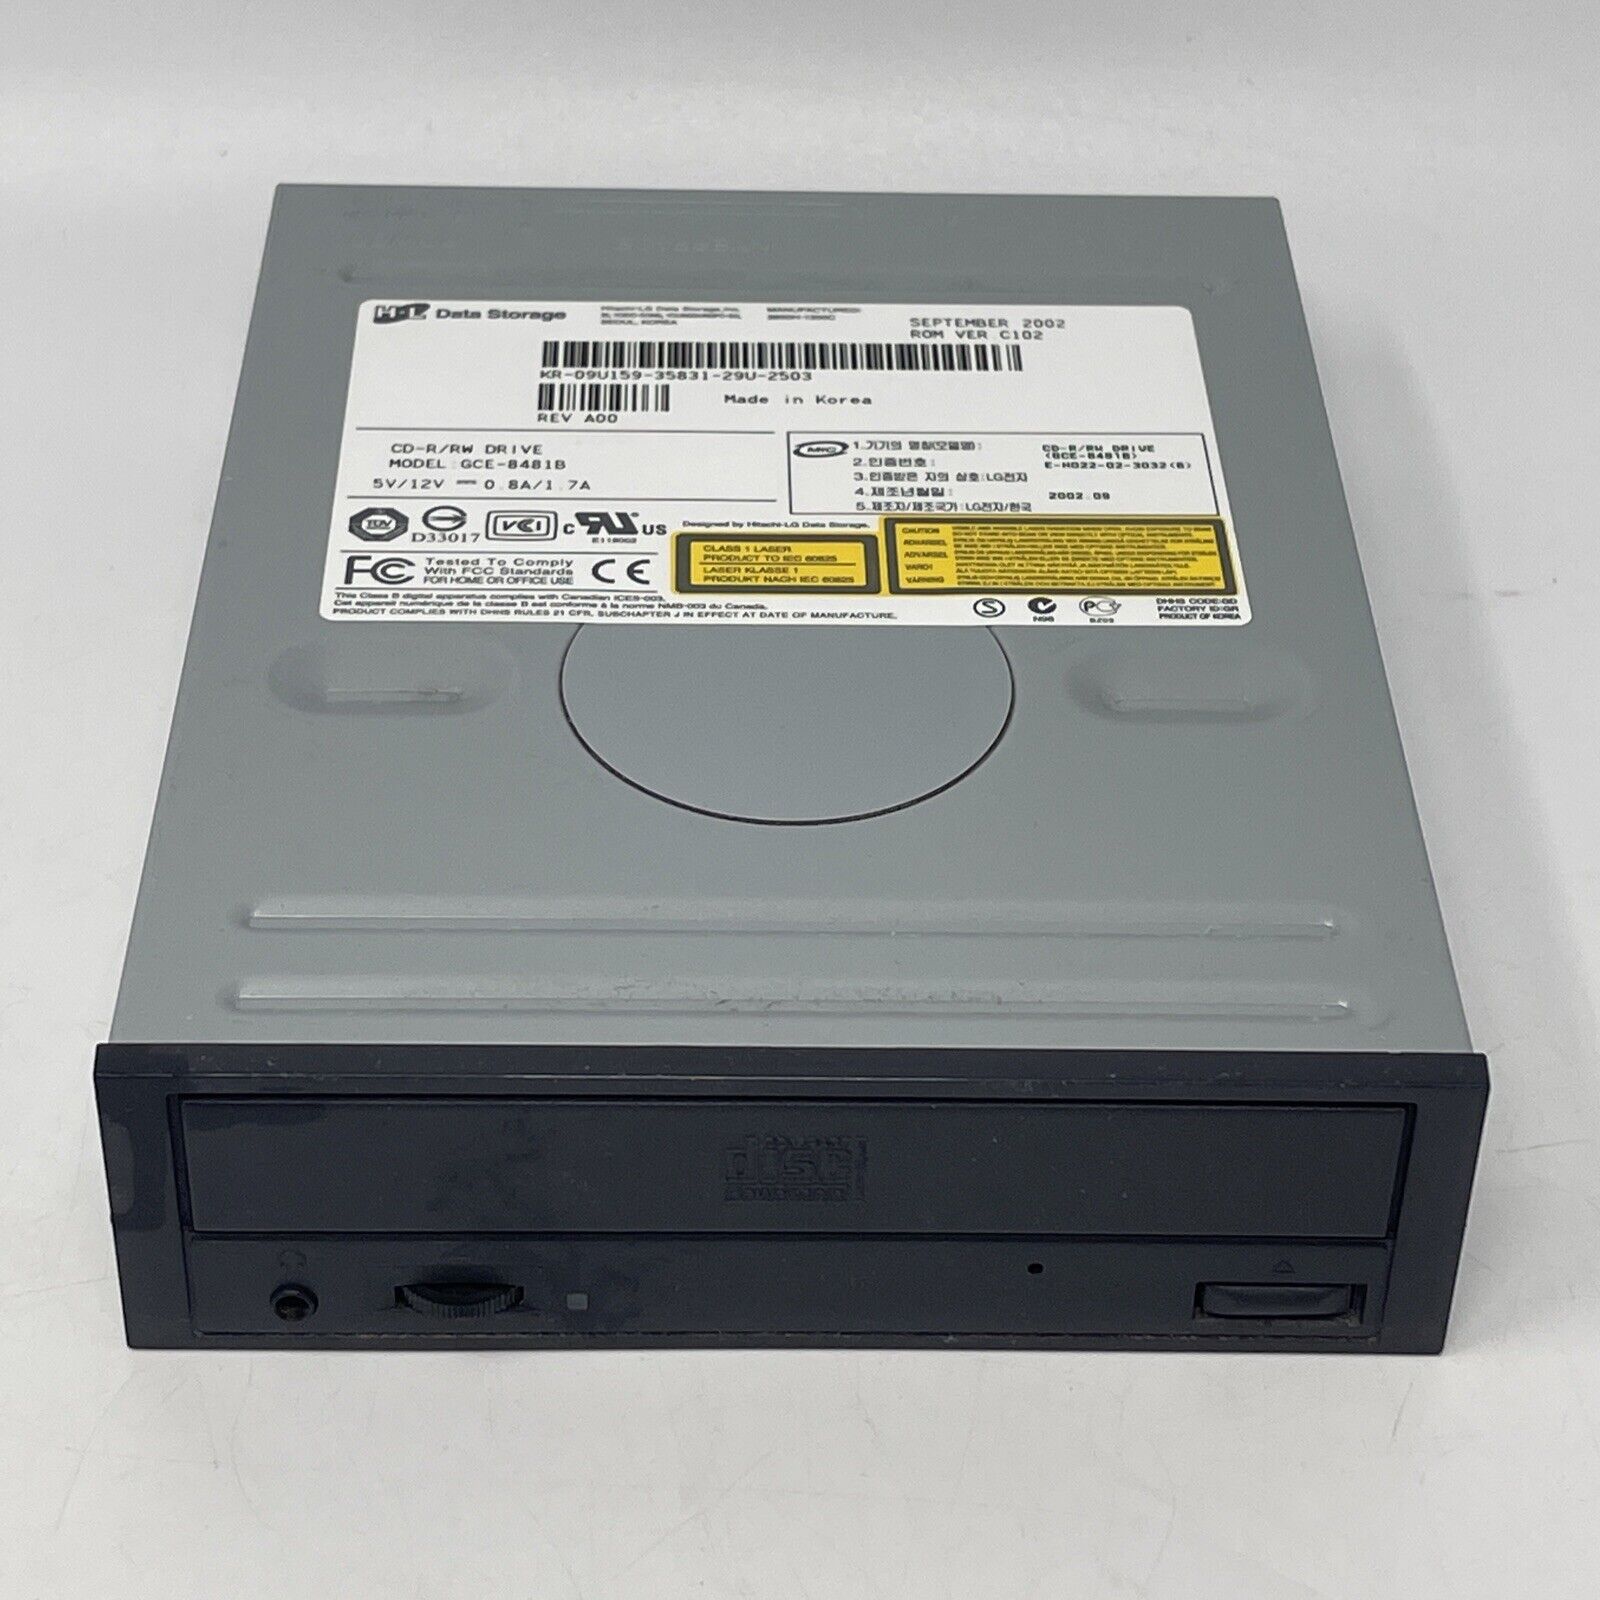 Hitachi LG H L Data Storage CD-R/RW Drive Model GCE-8481B IDE